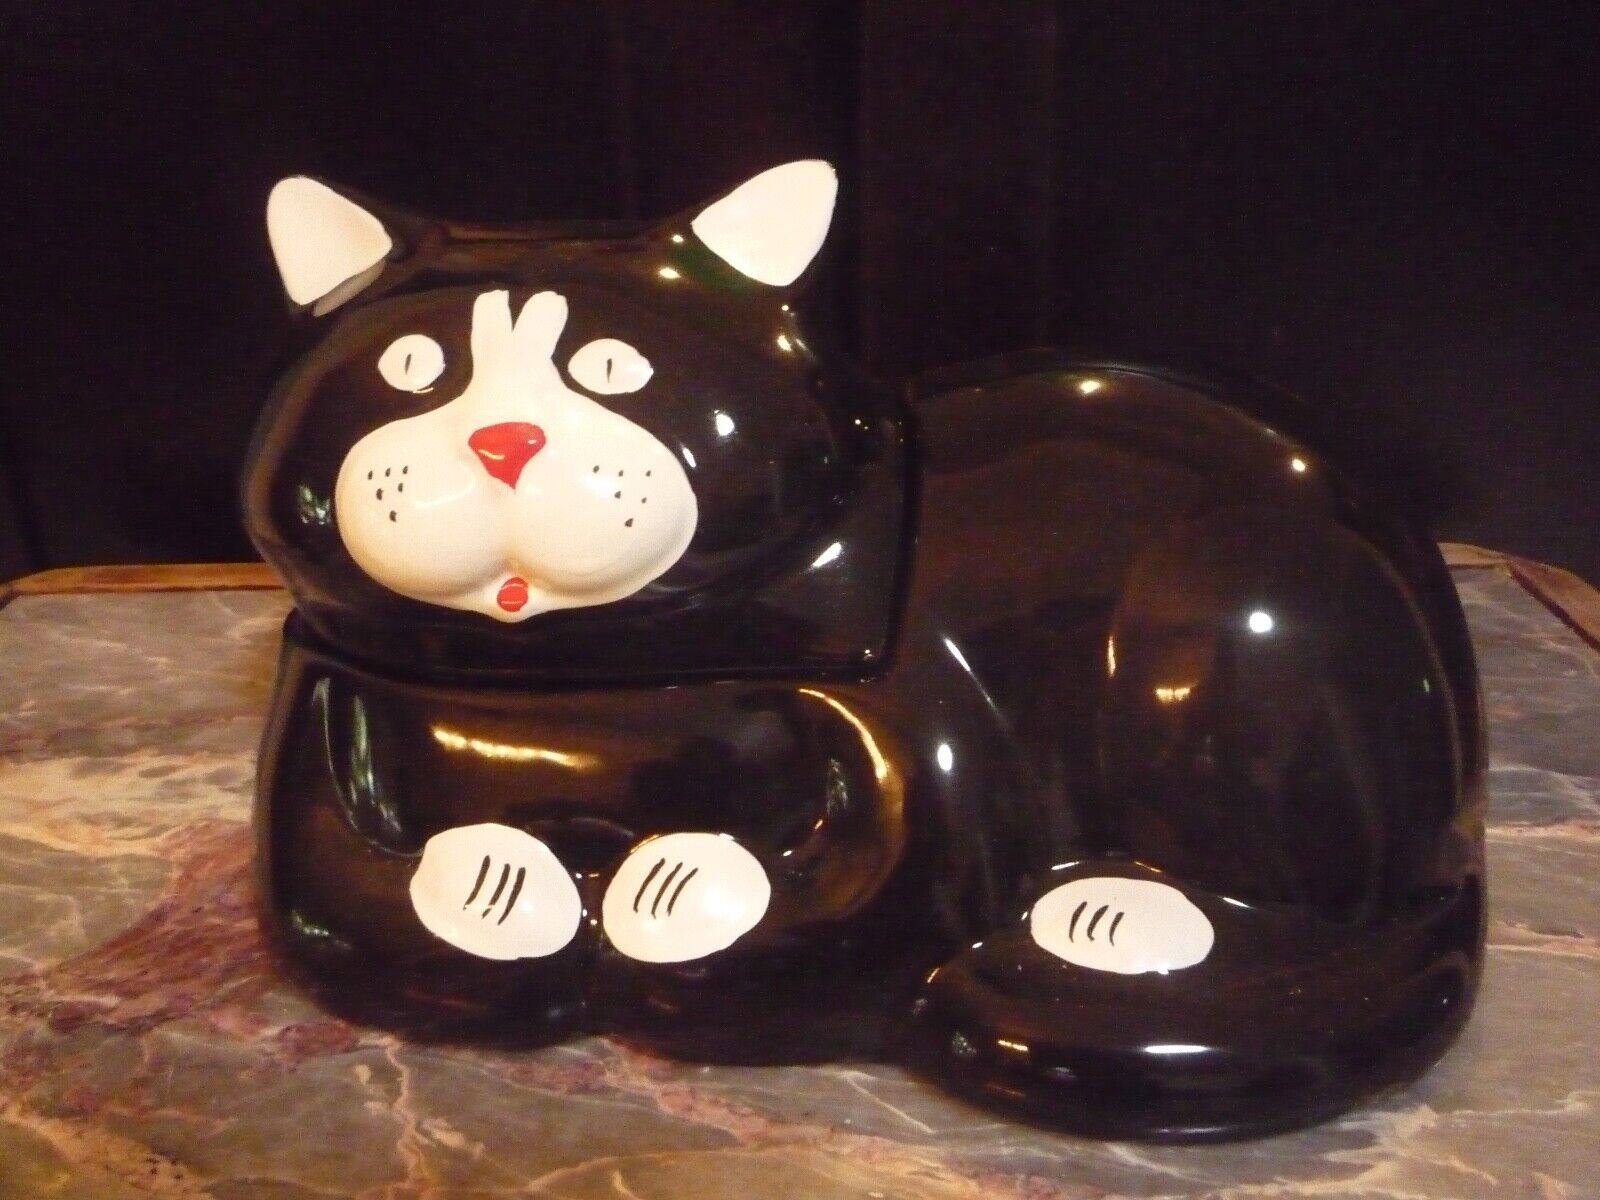 NEW Celebrity Owned Vintage Black & White Tuxedo Cat Kitty Cookie Jar Ceramic